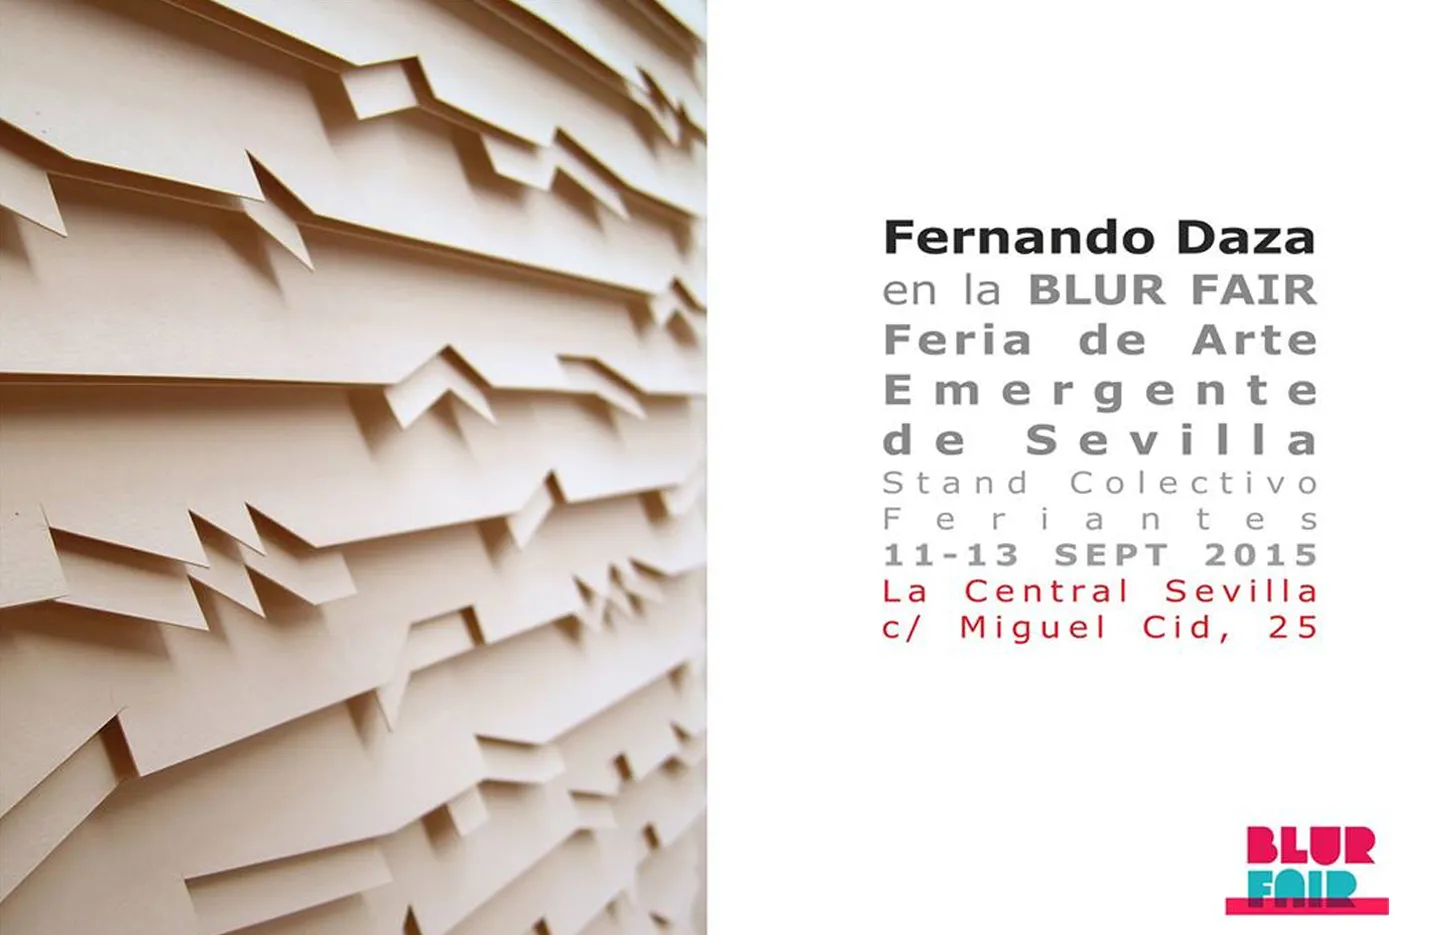 Fernando Daza Visual Artist - evento blur fair